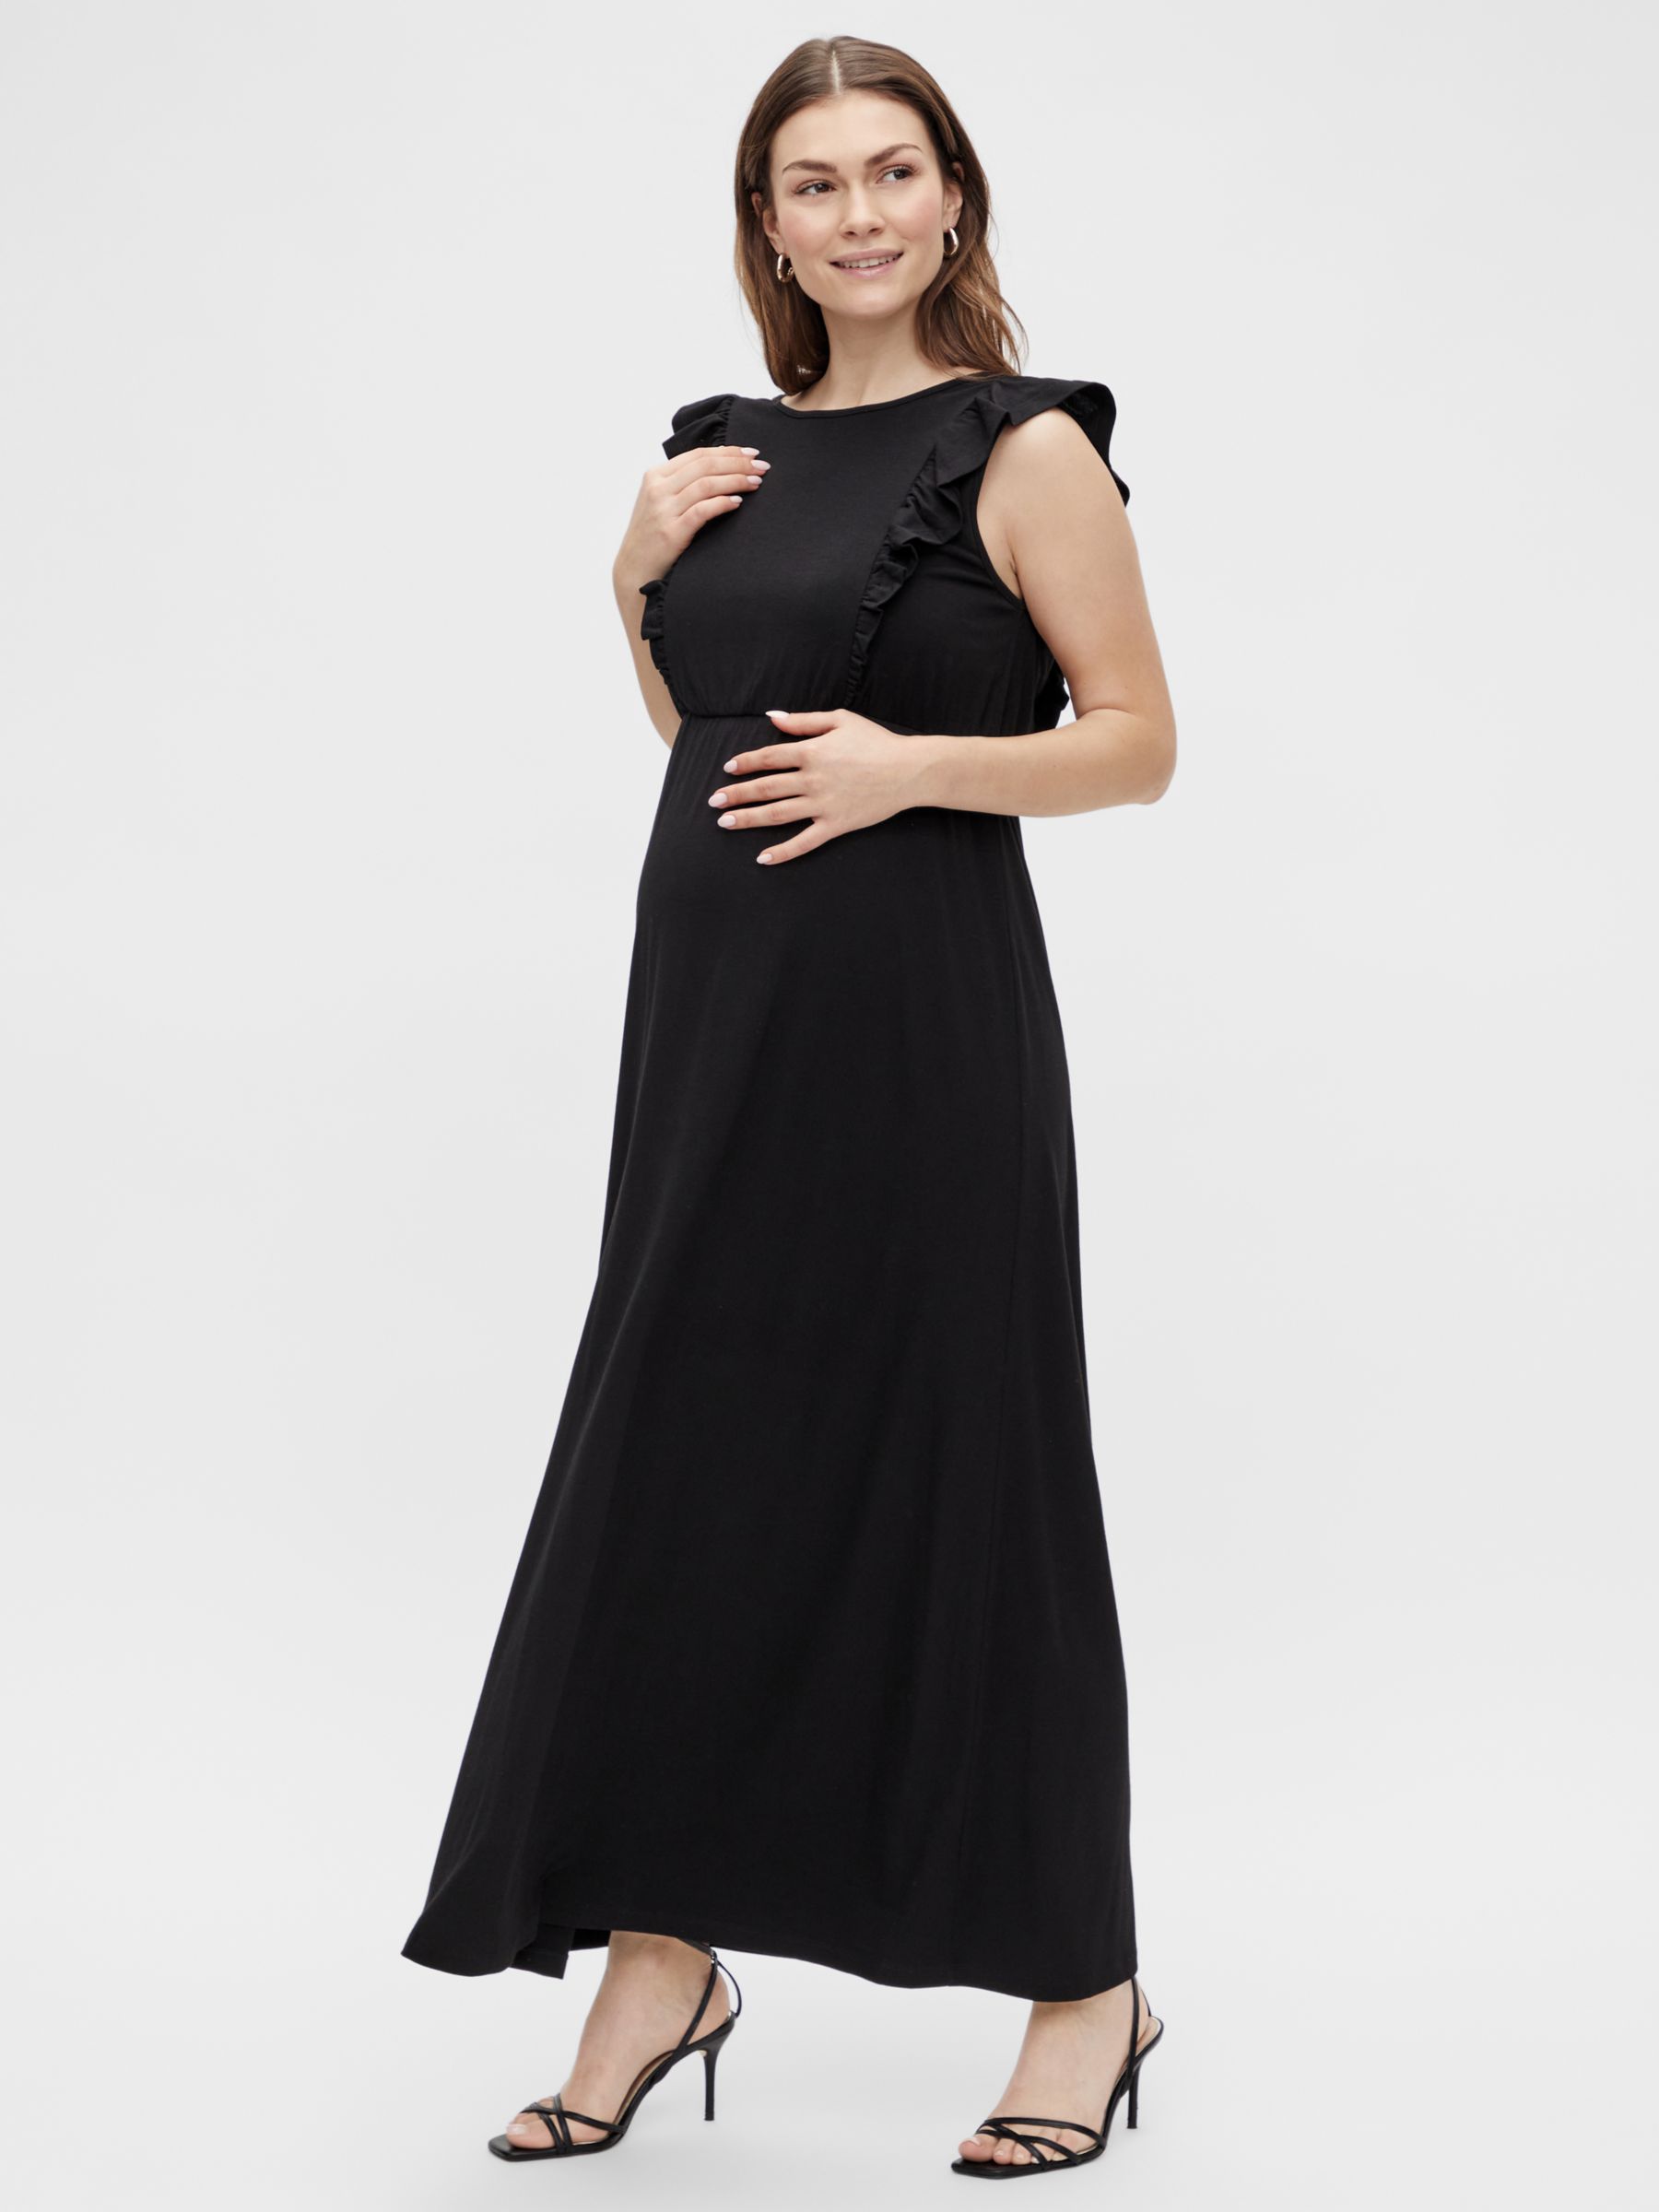 Mamalicious Roberta Mary Ruffle Maxi Maternity & Nursing Dress, Black, S